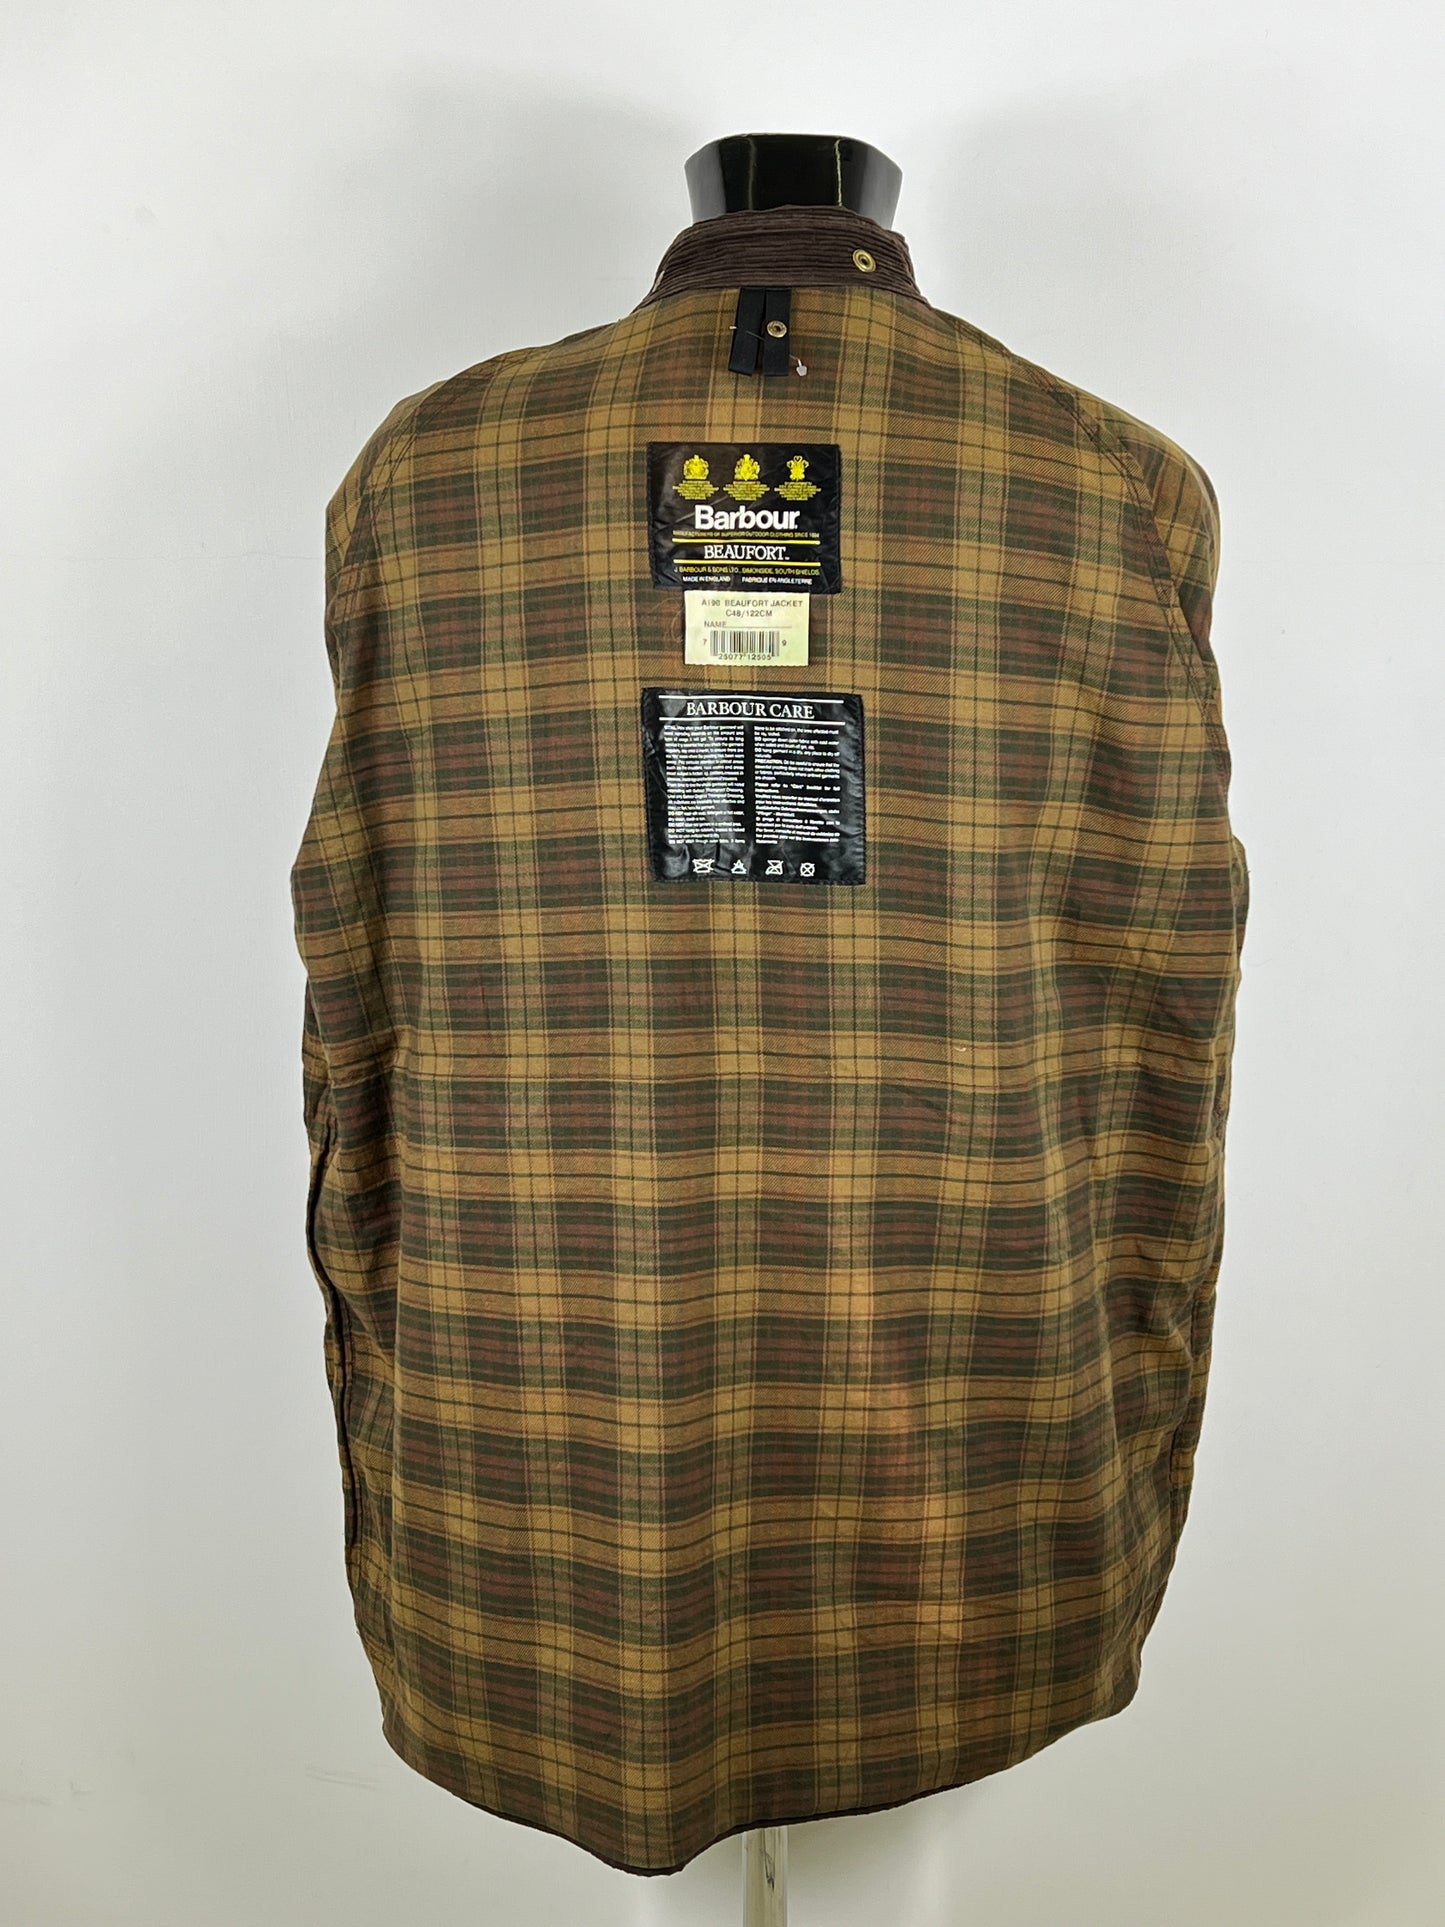 Barbour Giacca Beaufort vintage marrone C48/122cm Brown Wax Beaufort jacket XL